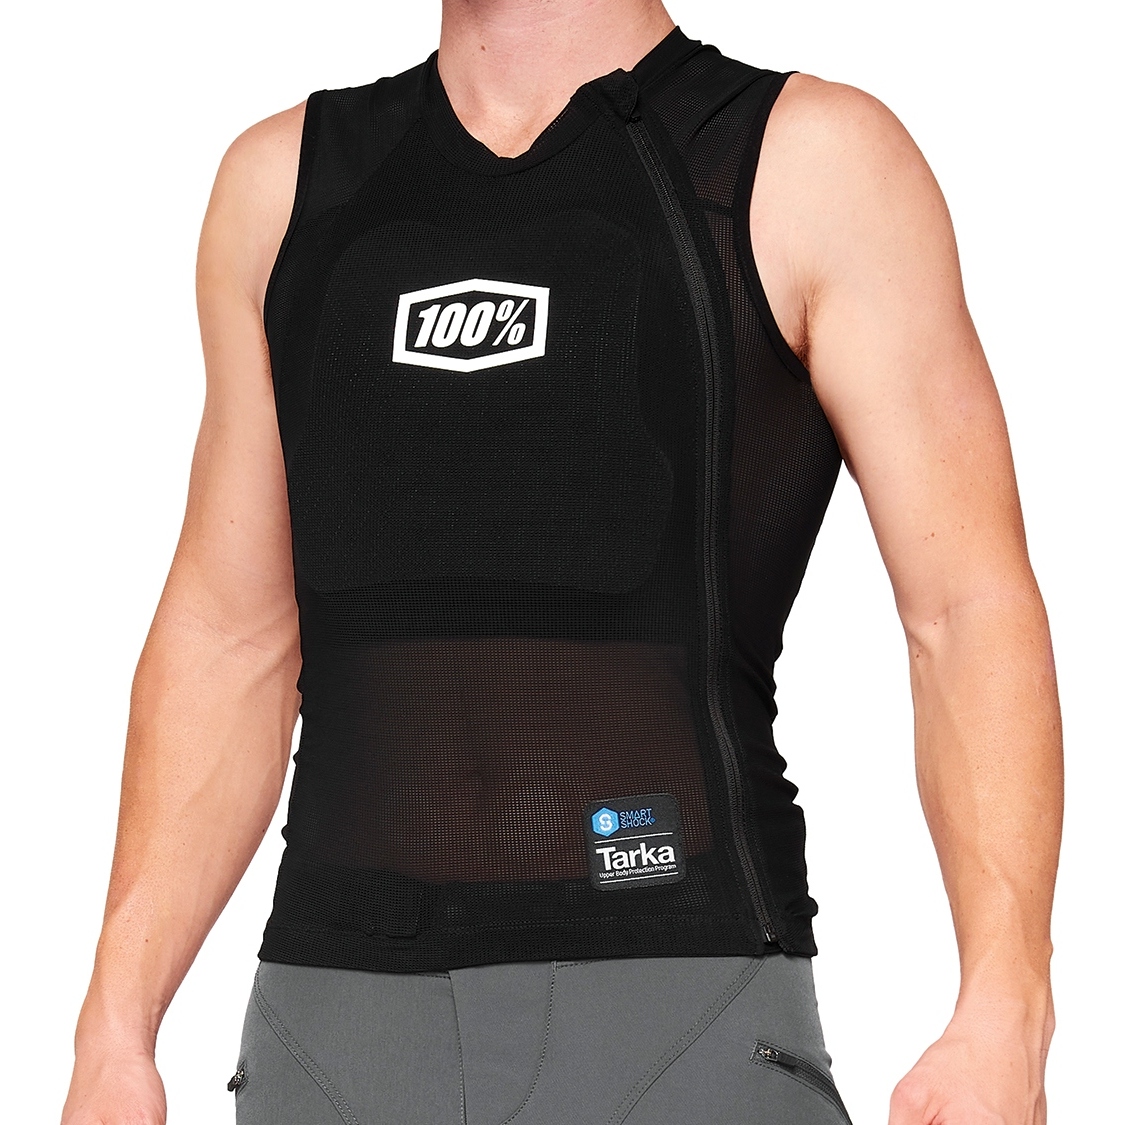 Productfoto van 100% Tarka Protection Vest - black